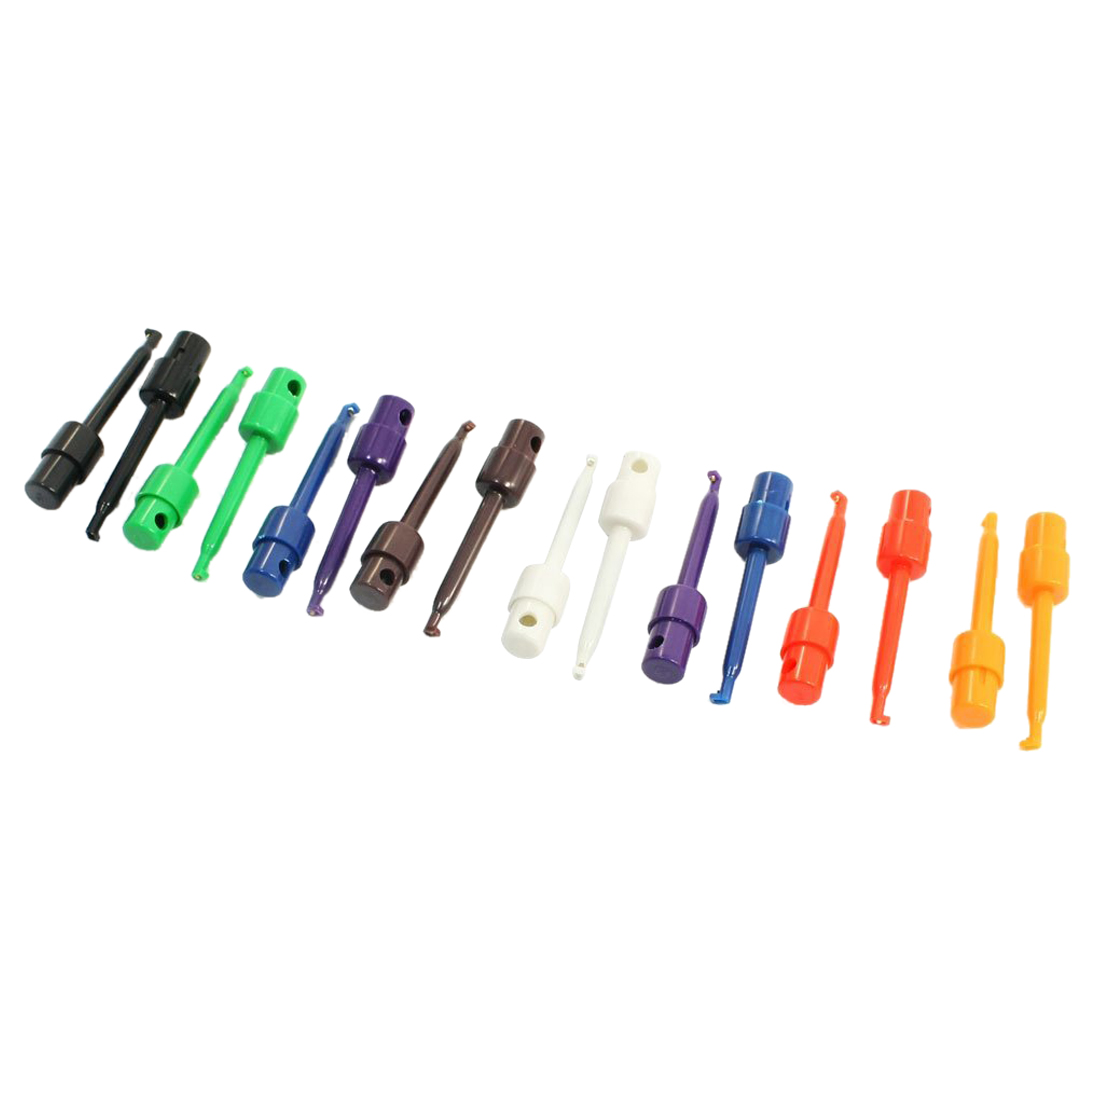 Ksol 멀티 미터 부품 다채로운 전기 테스트 후크 클립 그래버 8 쌍